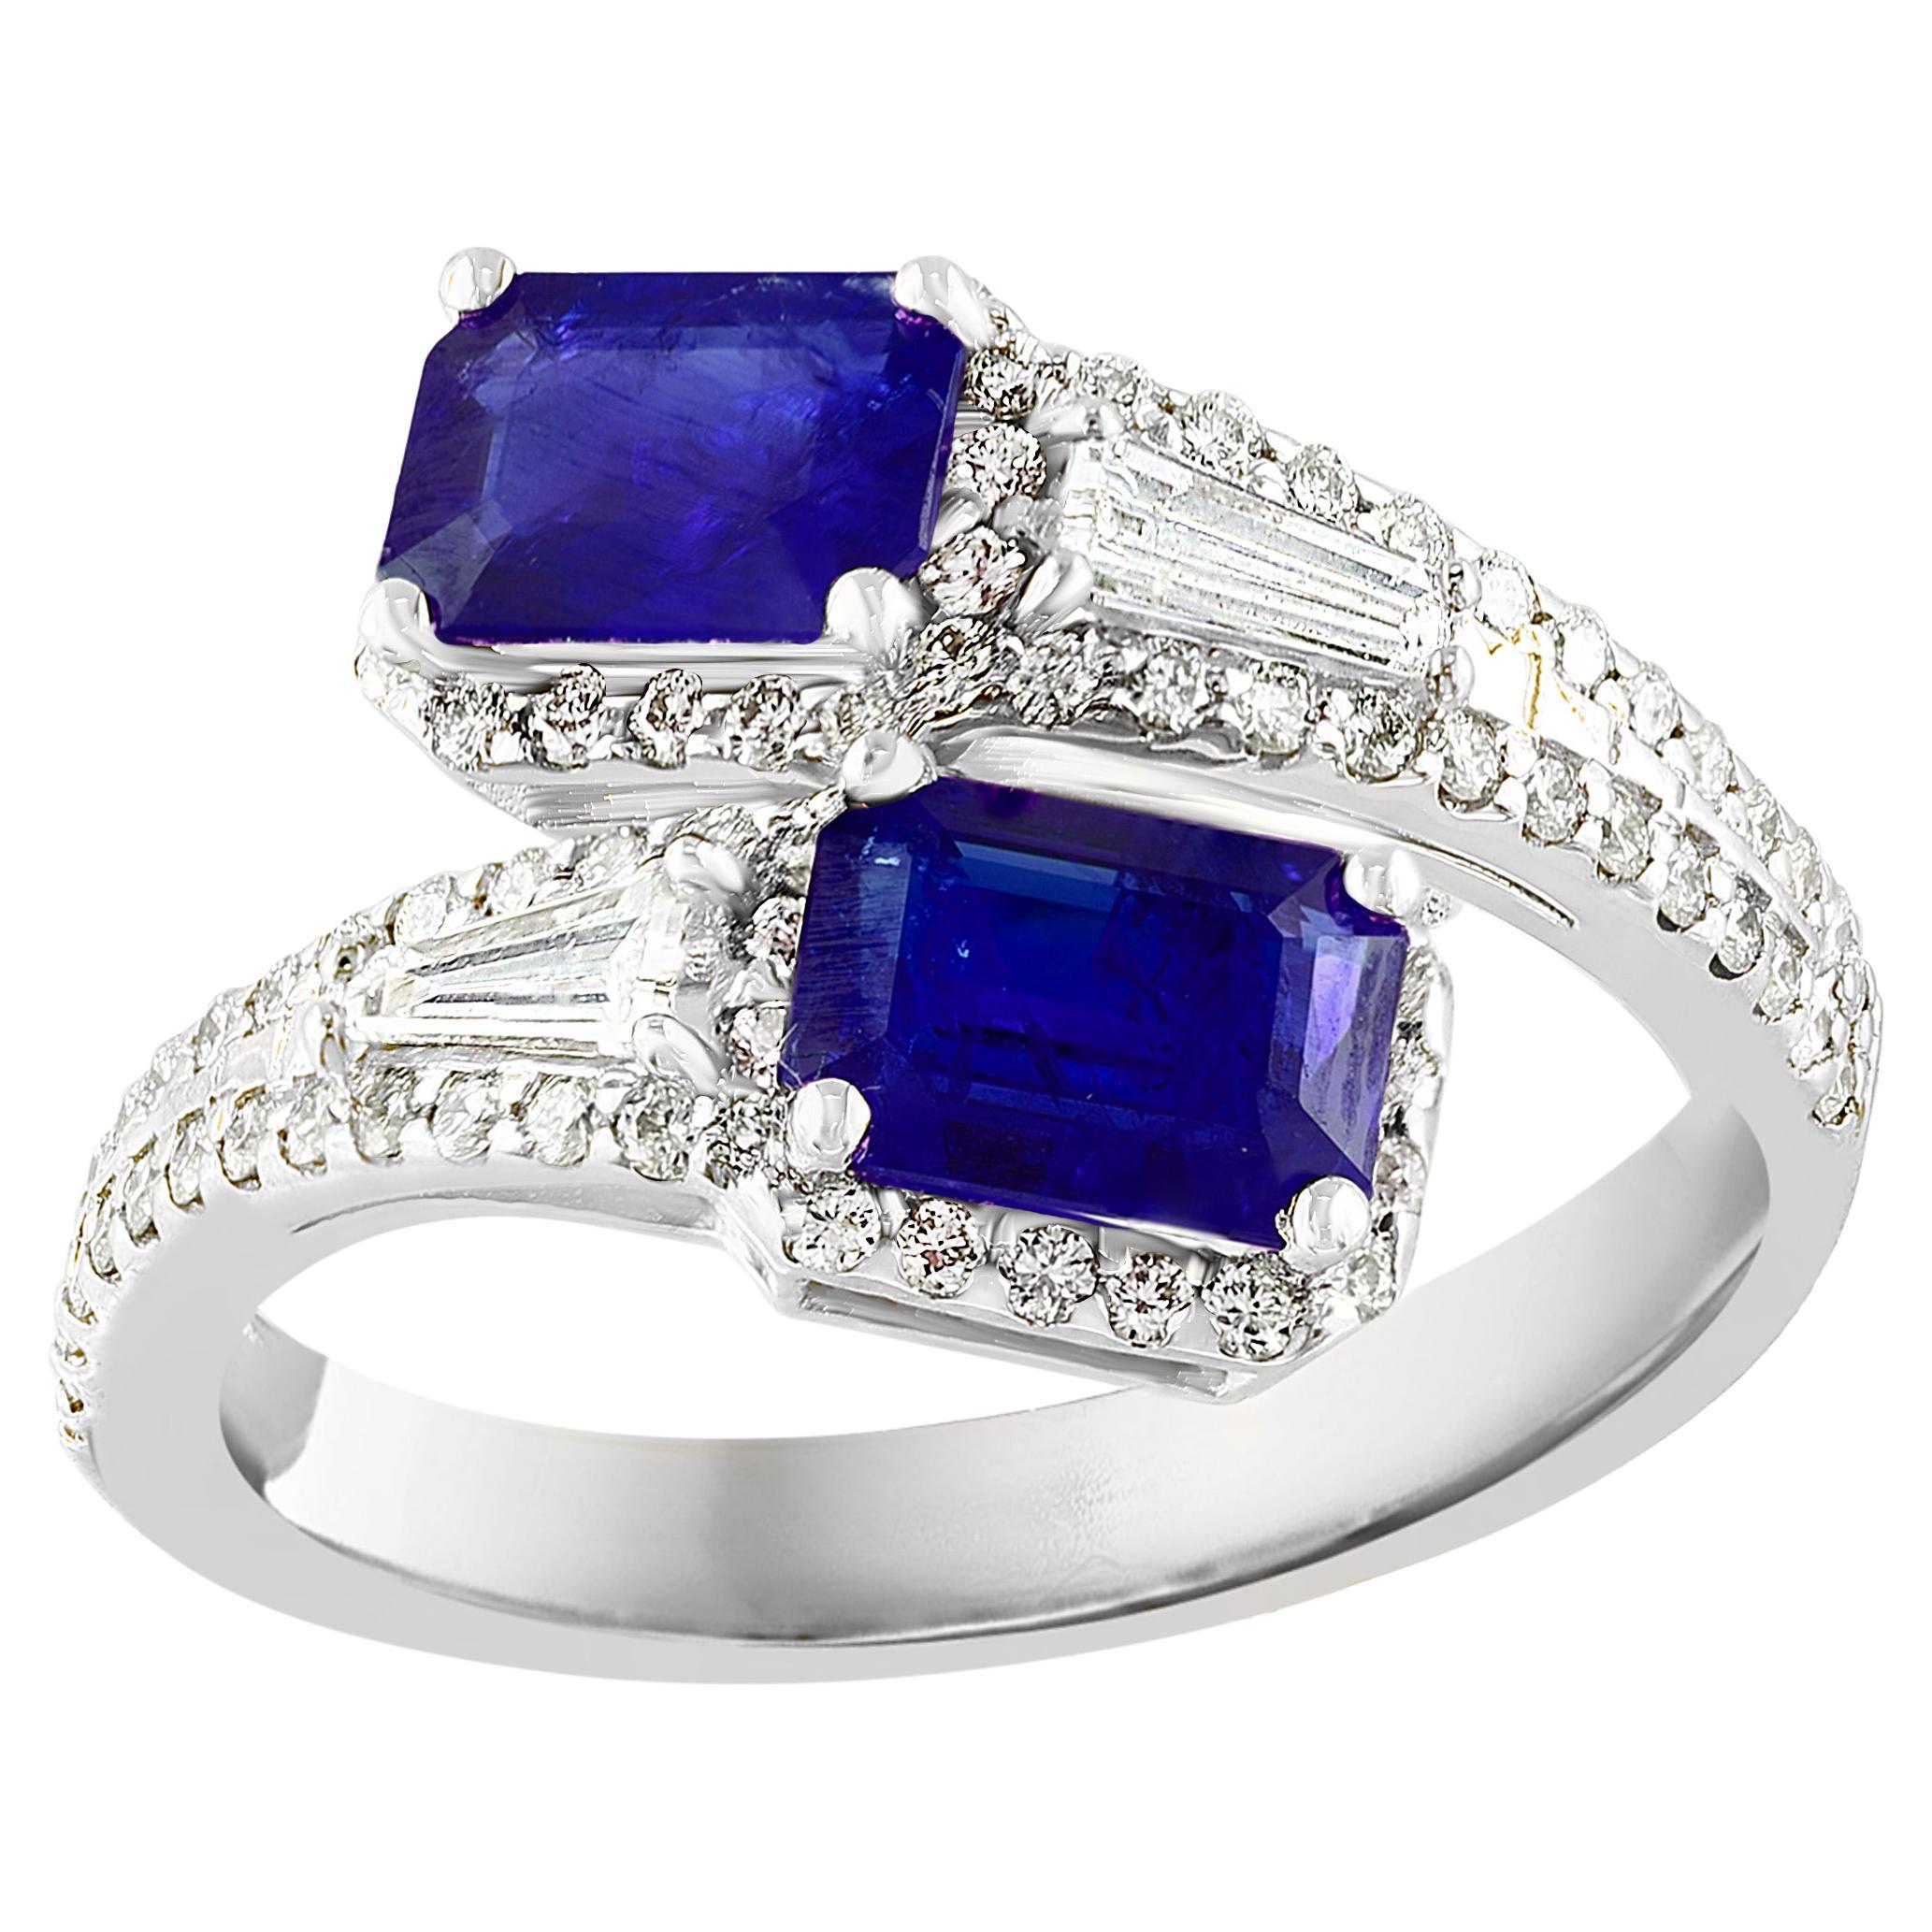 1.84 Carat Emerald Cut Sapphire Diamond Toi et Moi Engagement Ring 14K WhiteGold